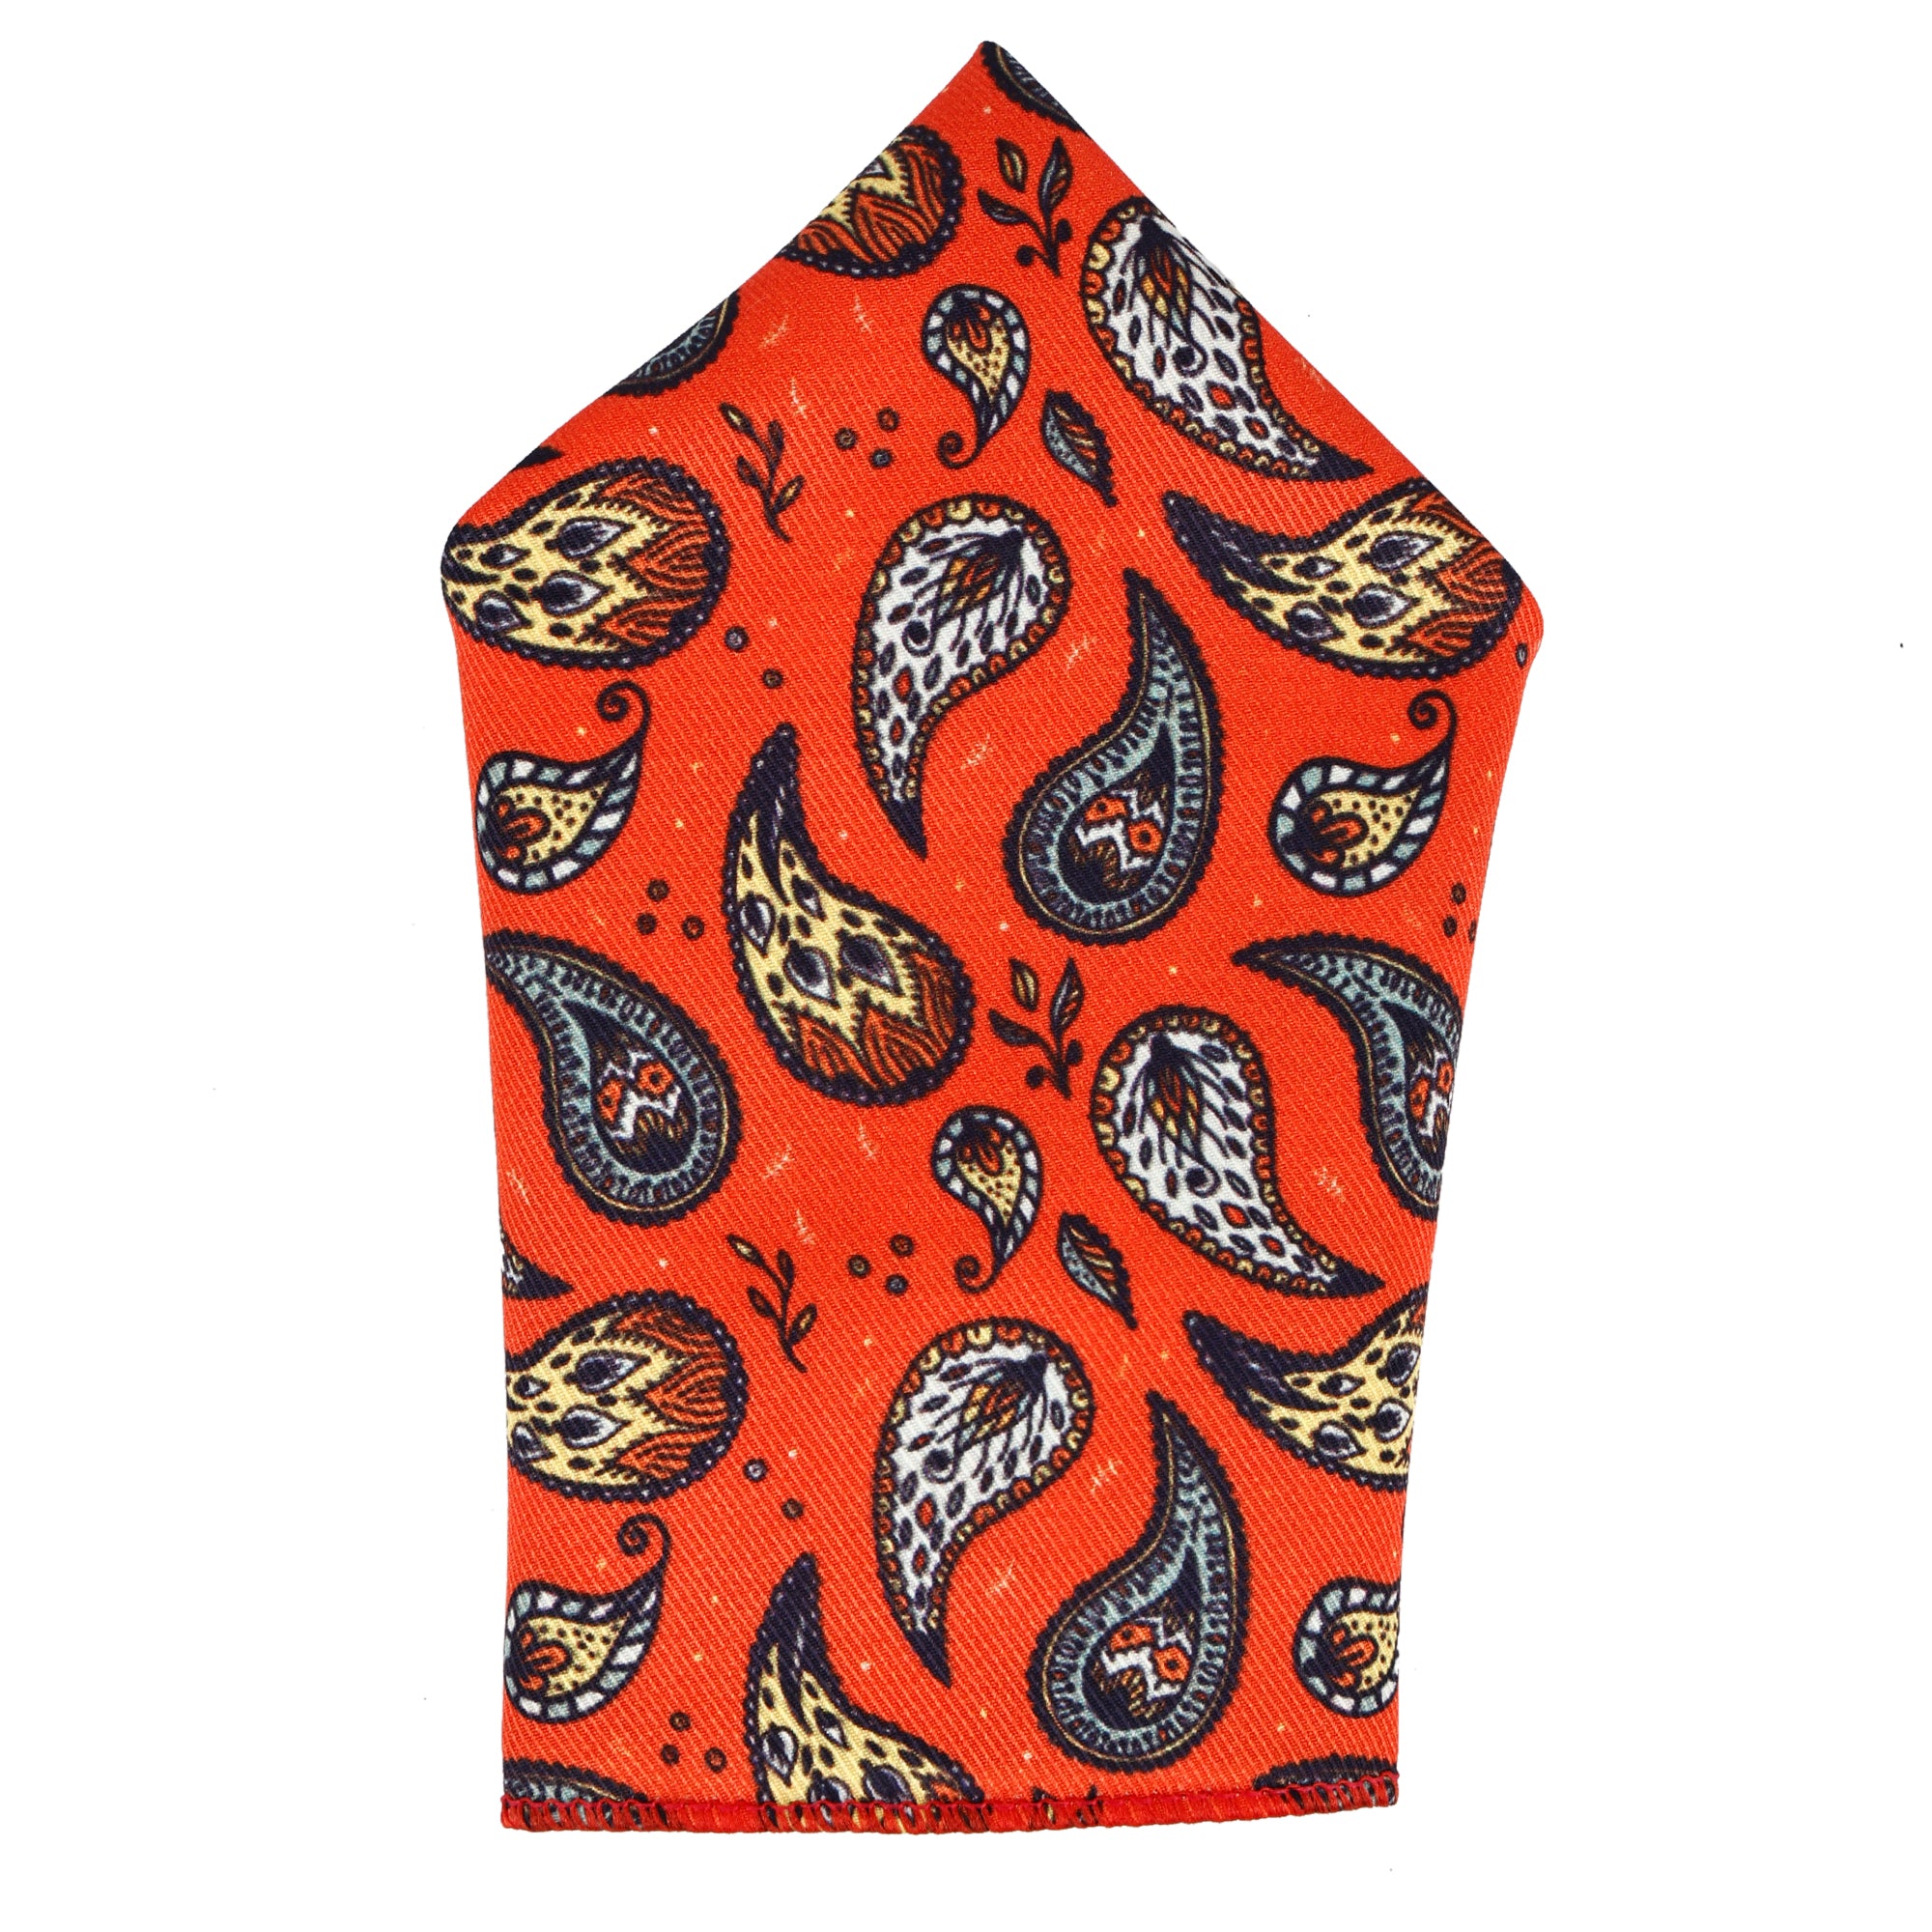 International Orange Luxury Italian Silk Necktie Set With Pocket Square Silver Tie Pin, Cufflinks & Brooch